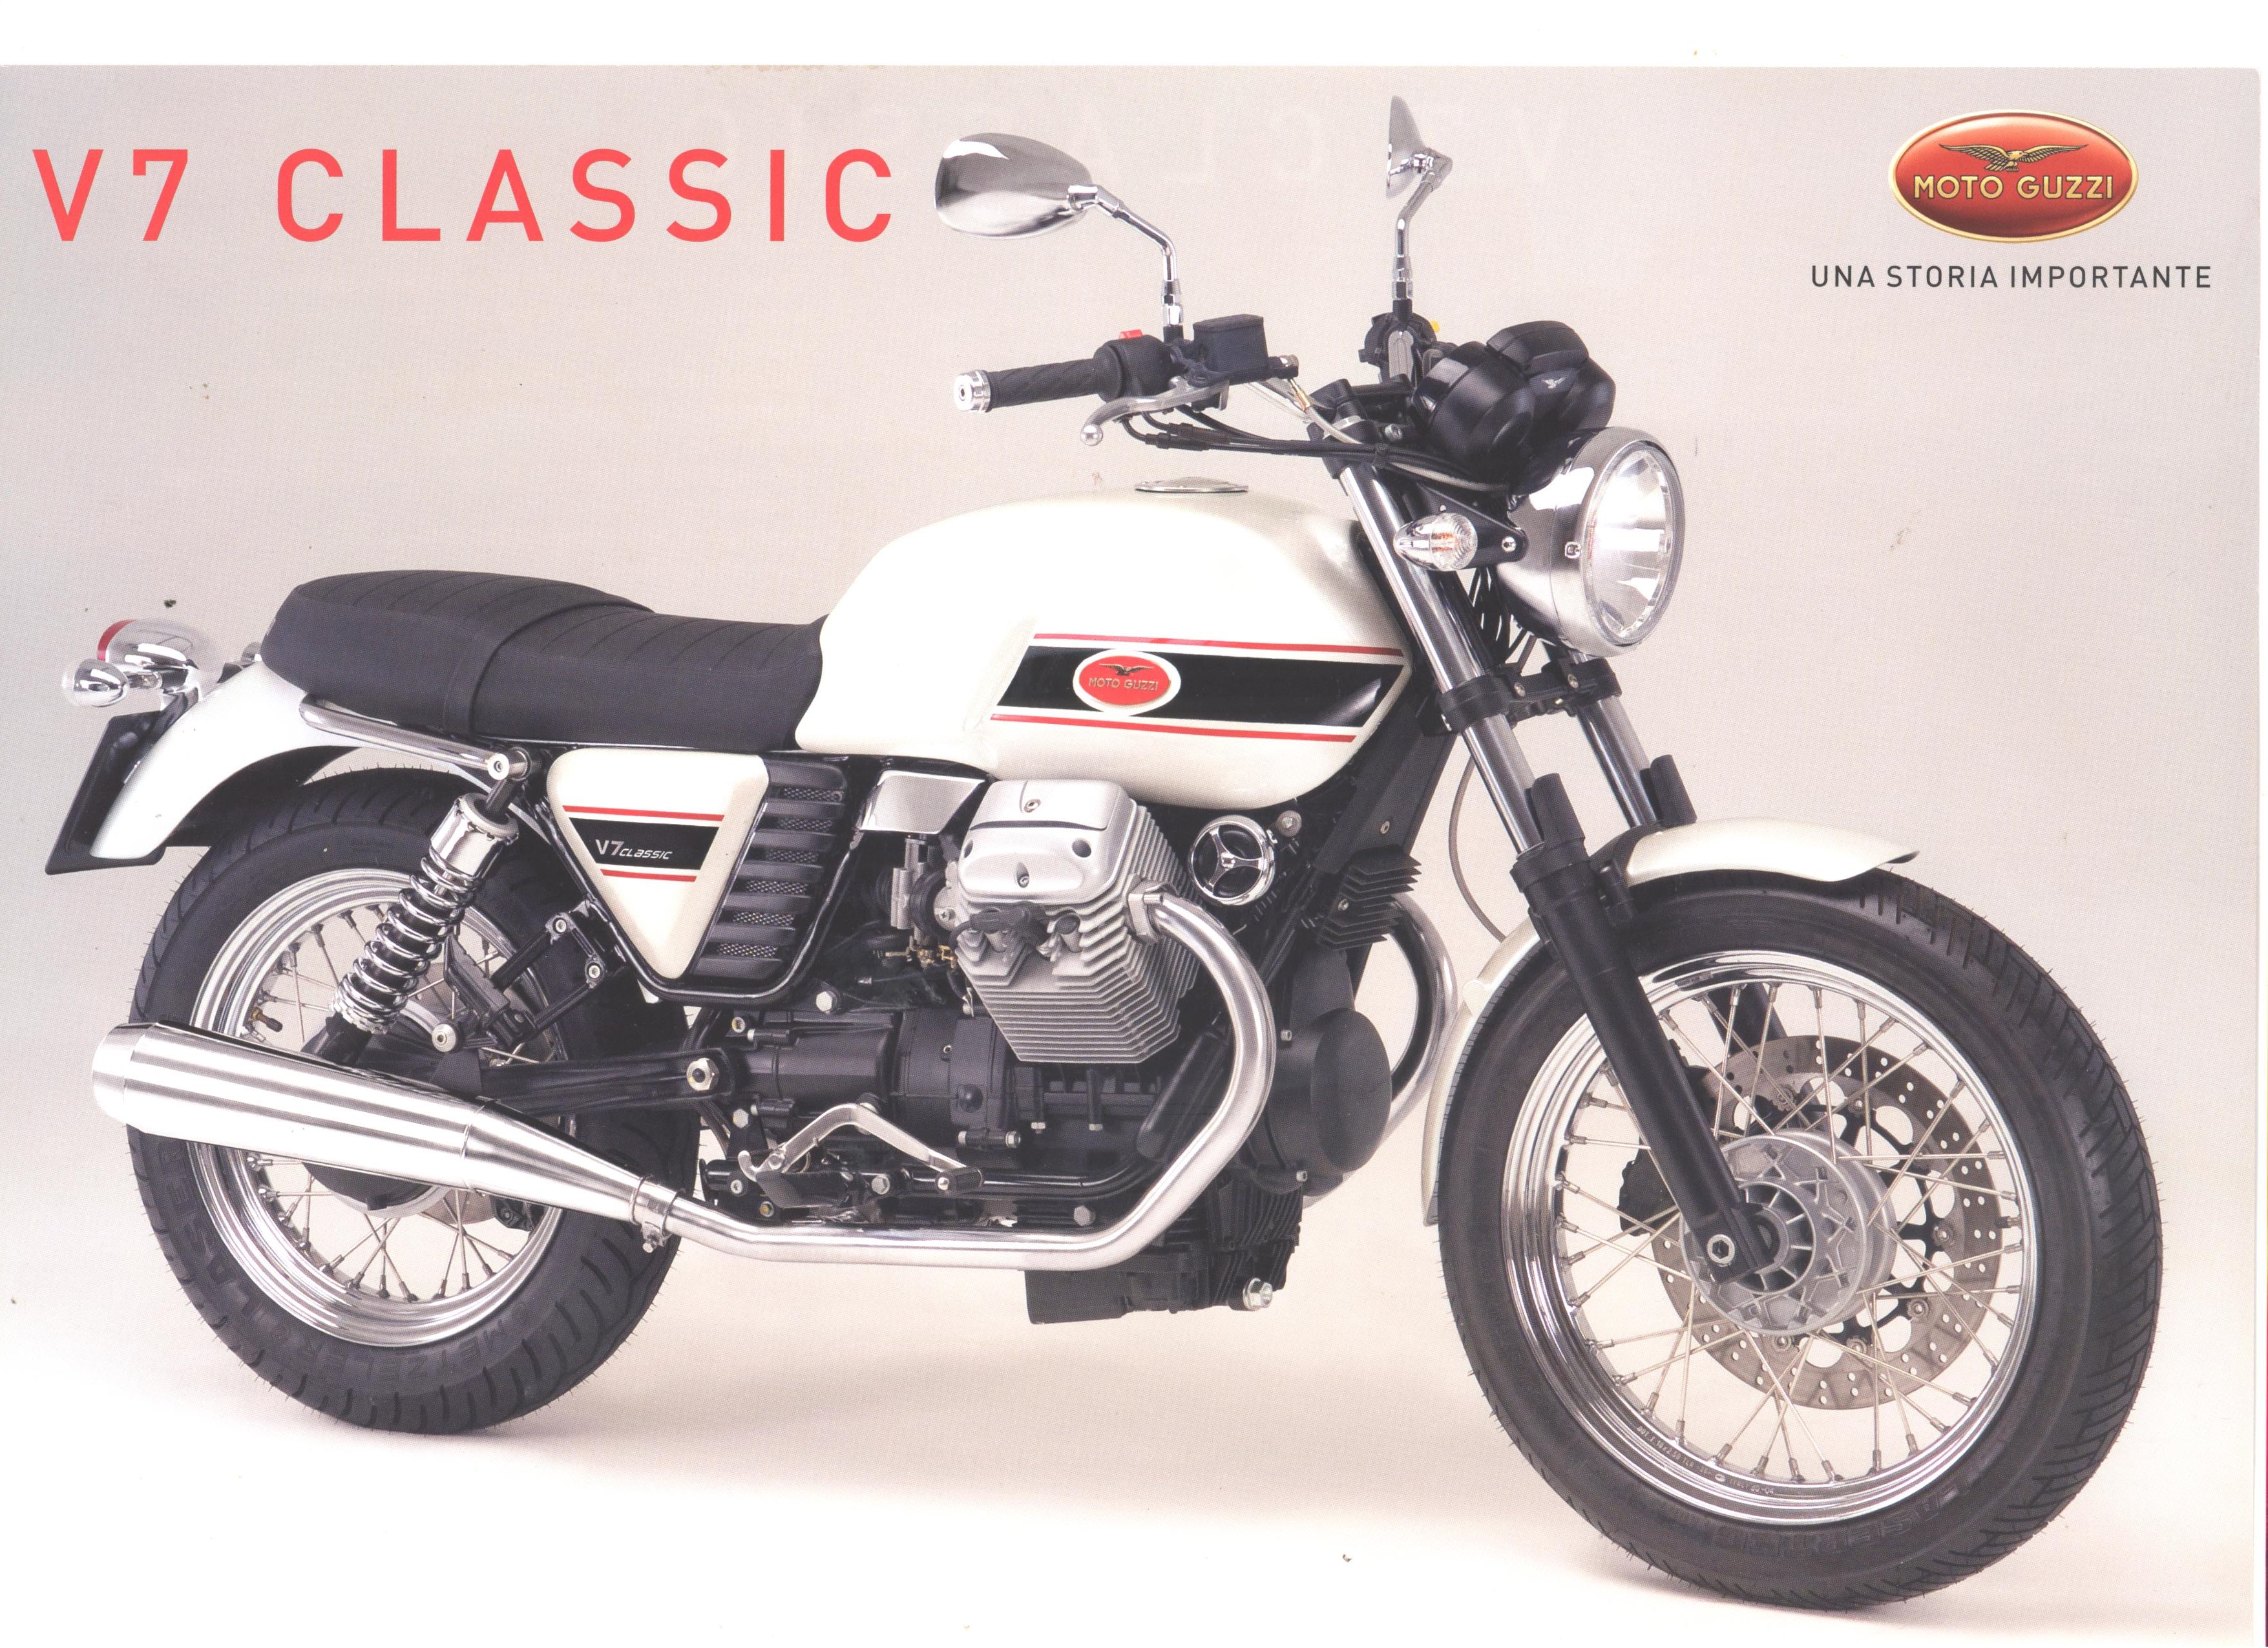 Moto Guzzi factory brochure: V7 Classic